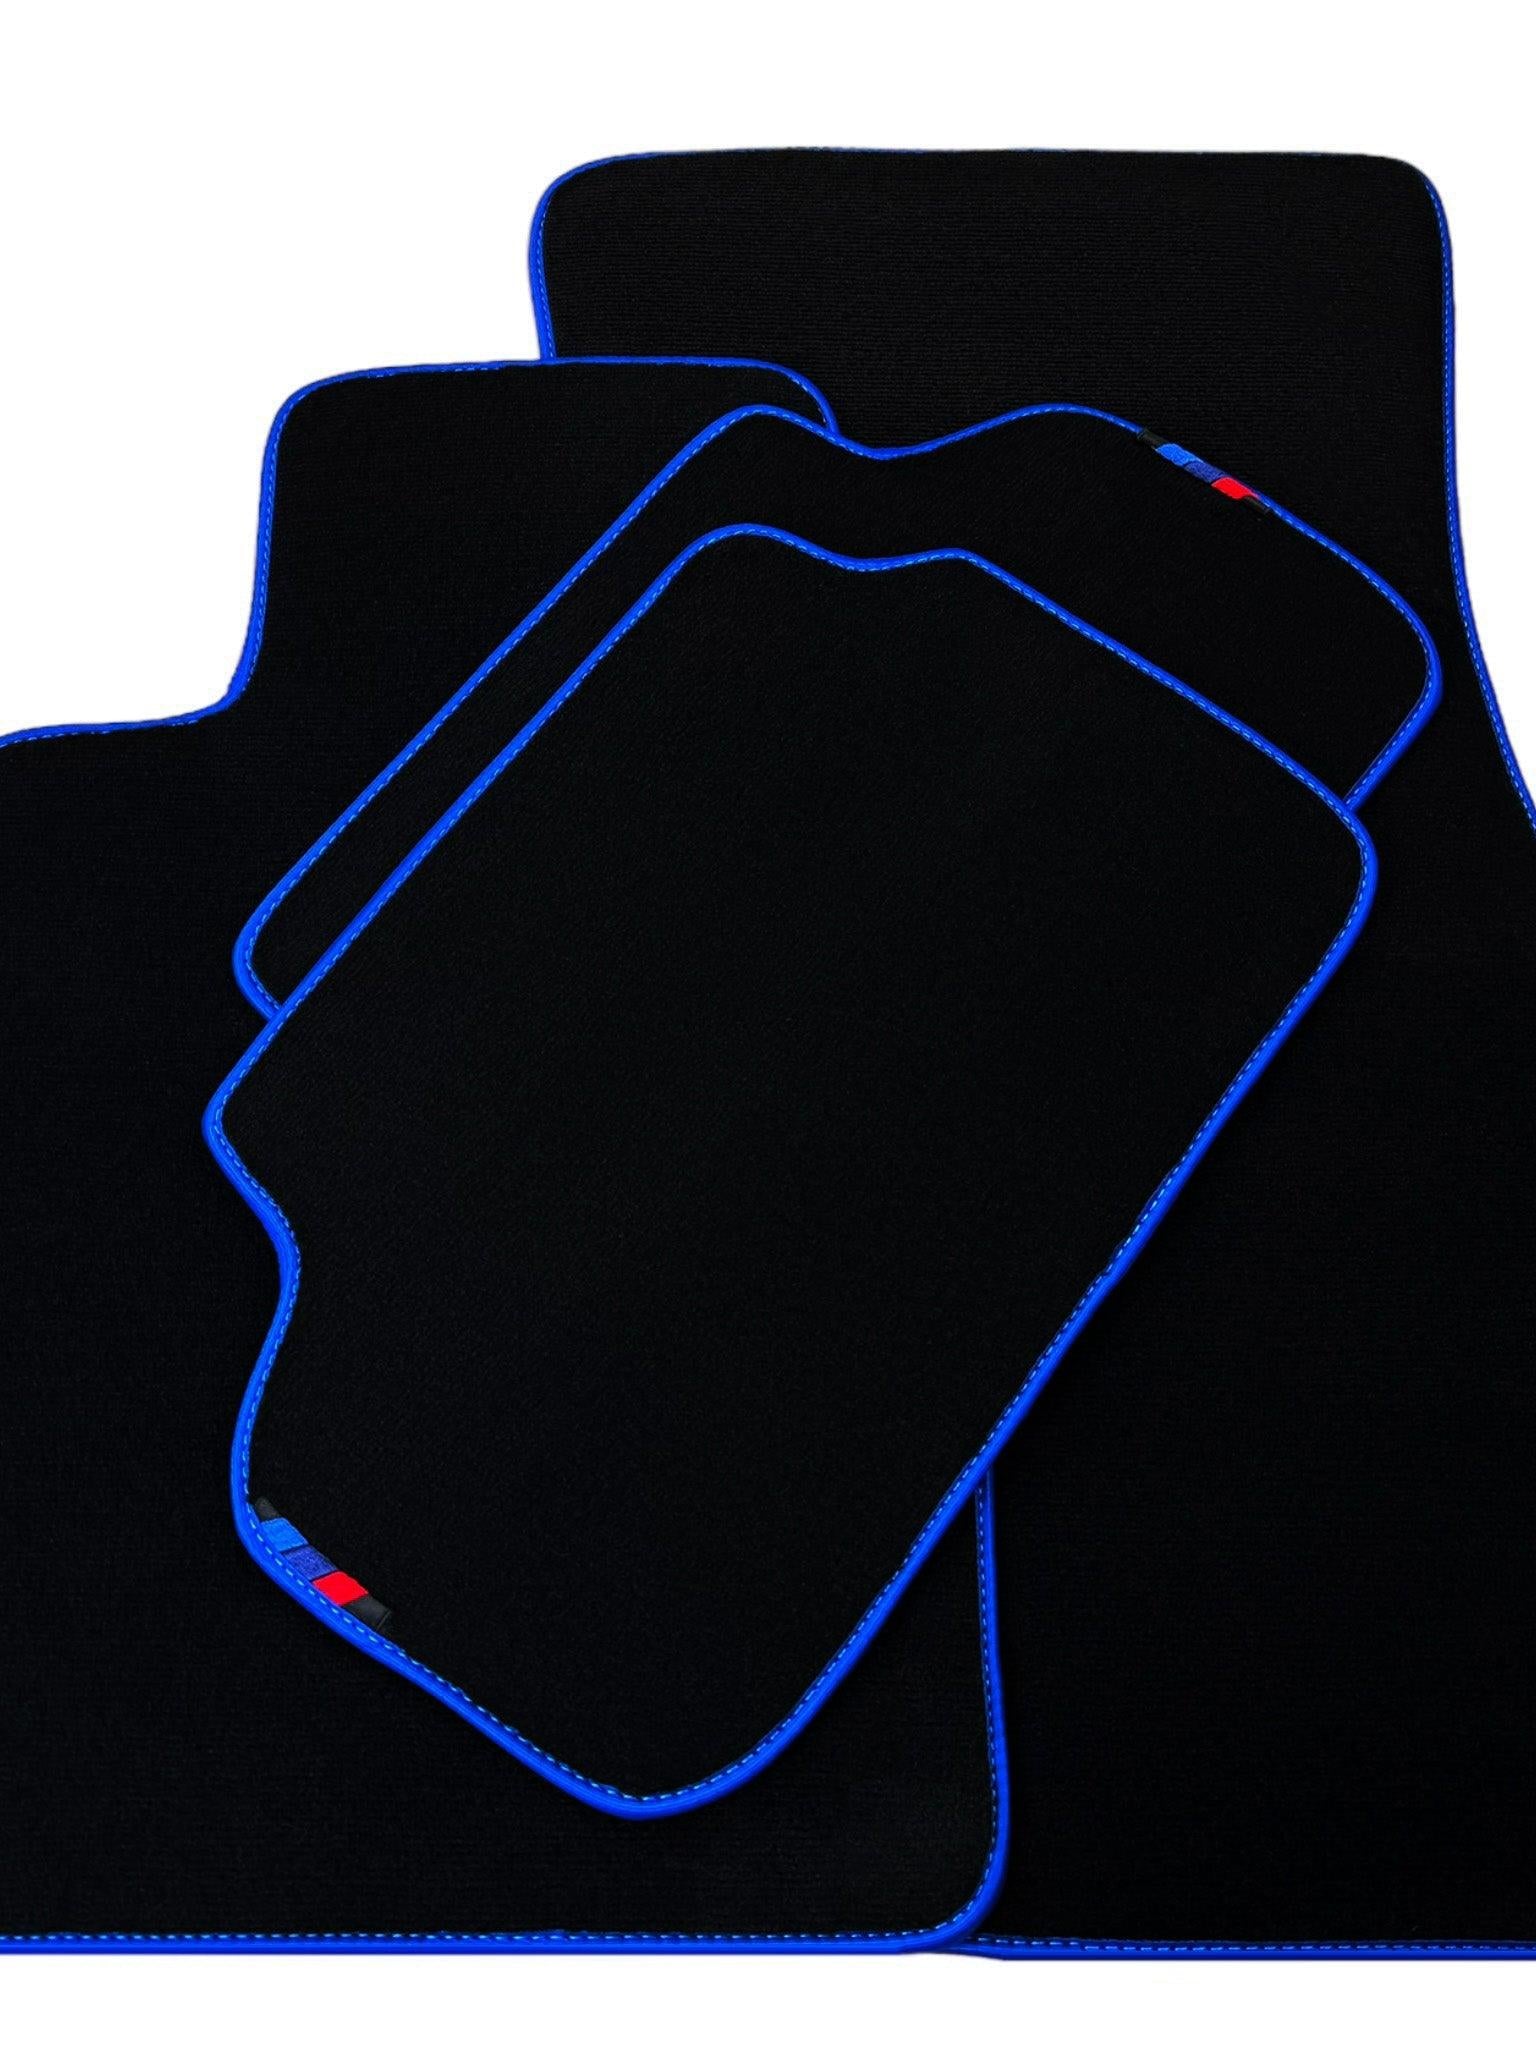 Black Floor Floor Mats For BMW X2 Series F39 | Blue Trim